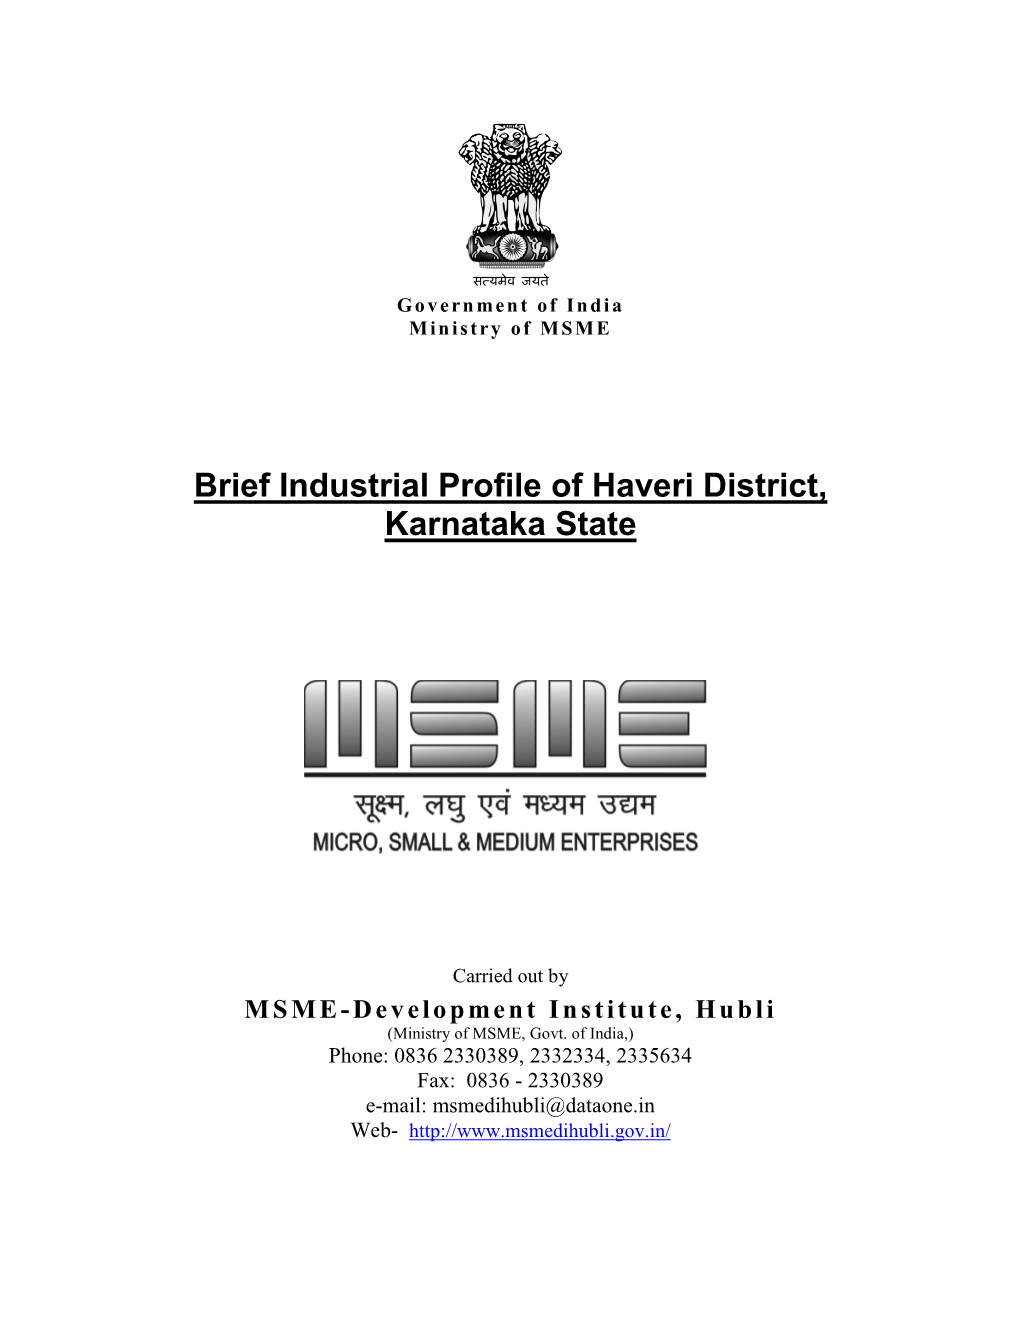 Brief Industrial Profile of Haveri District, Karnataka State